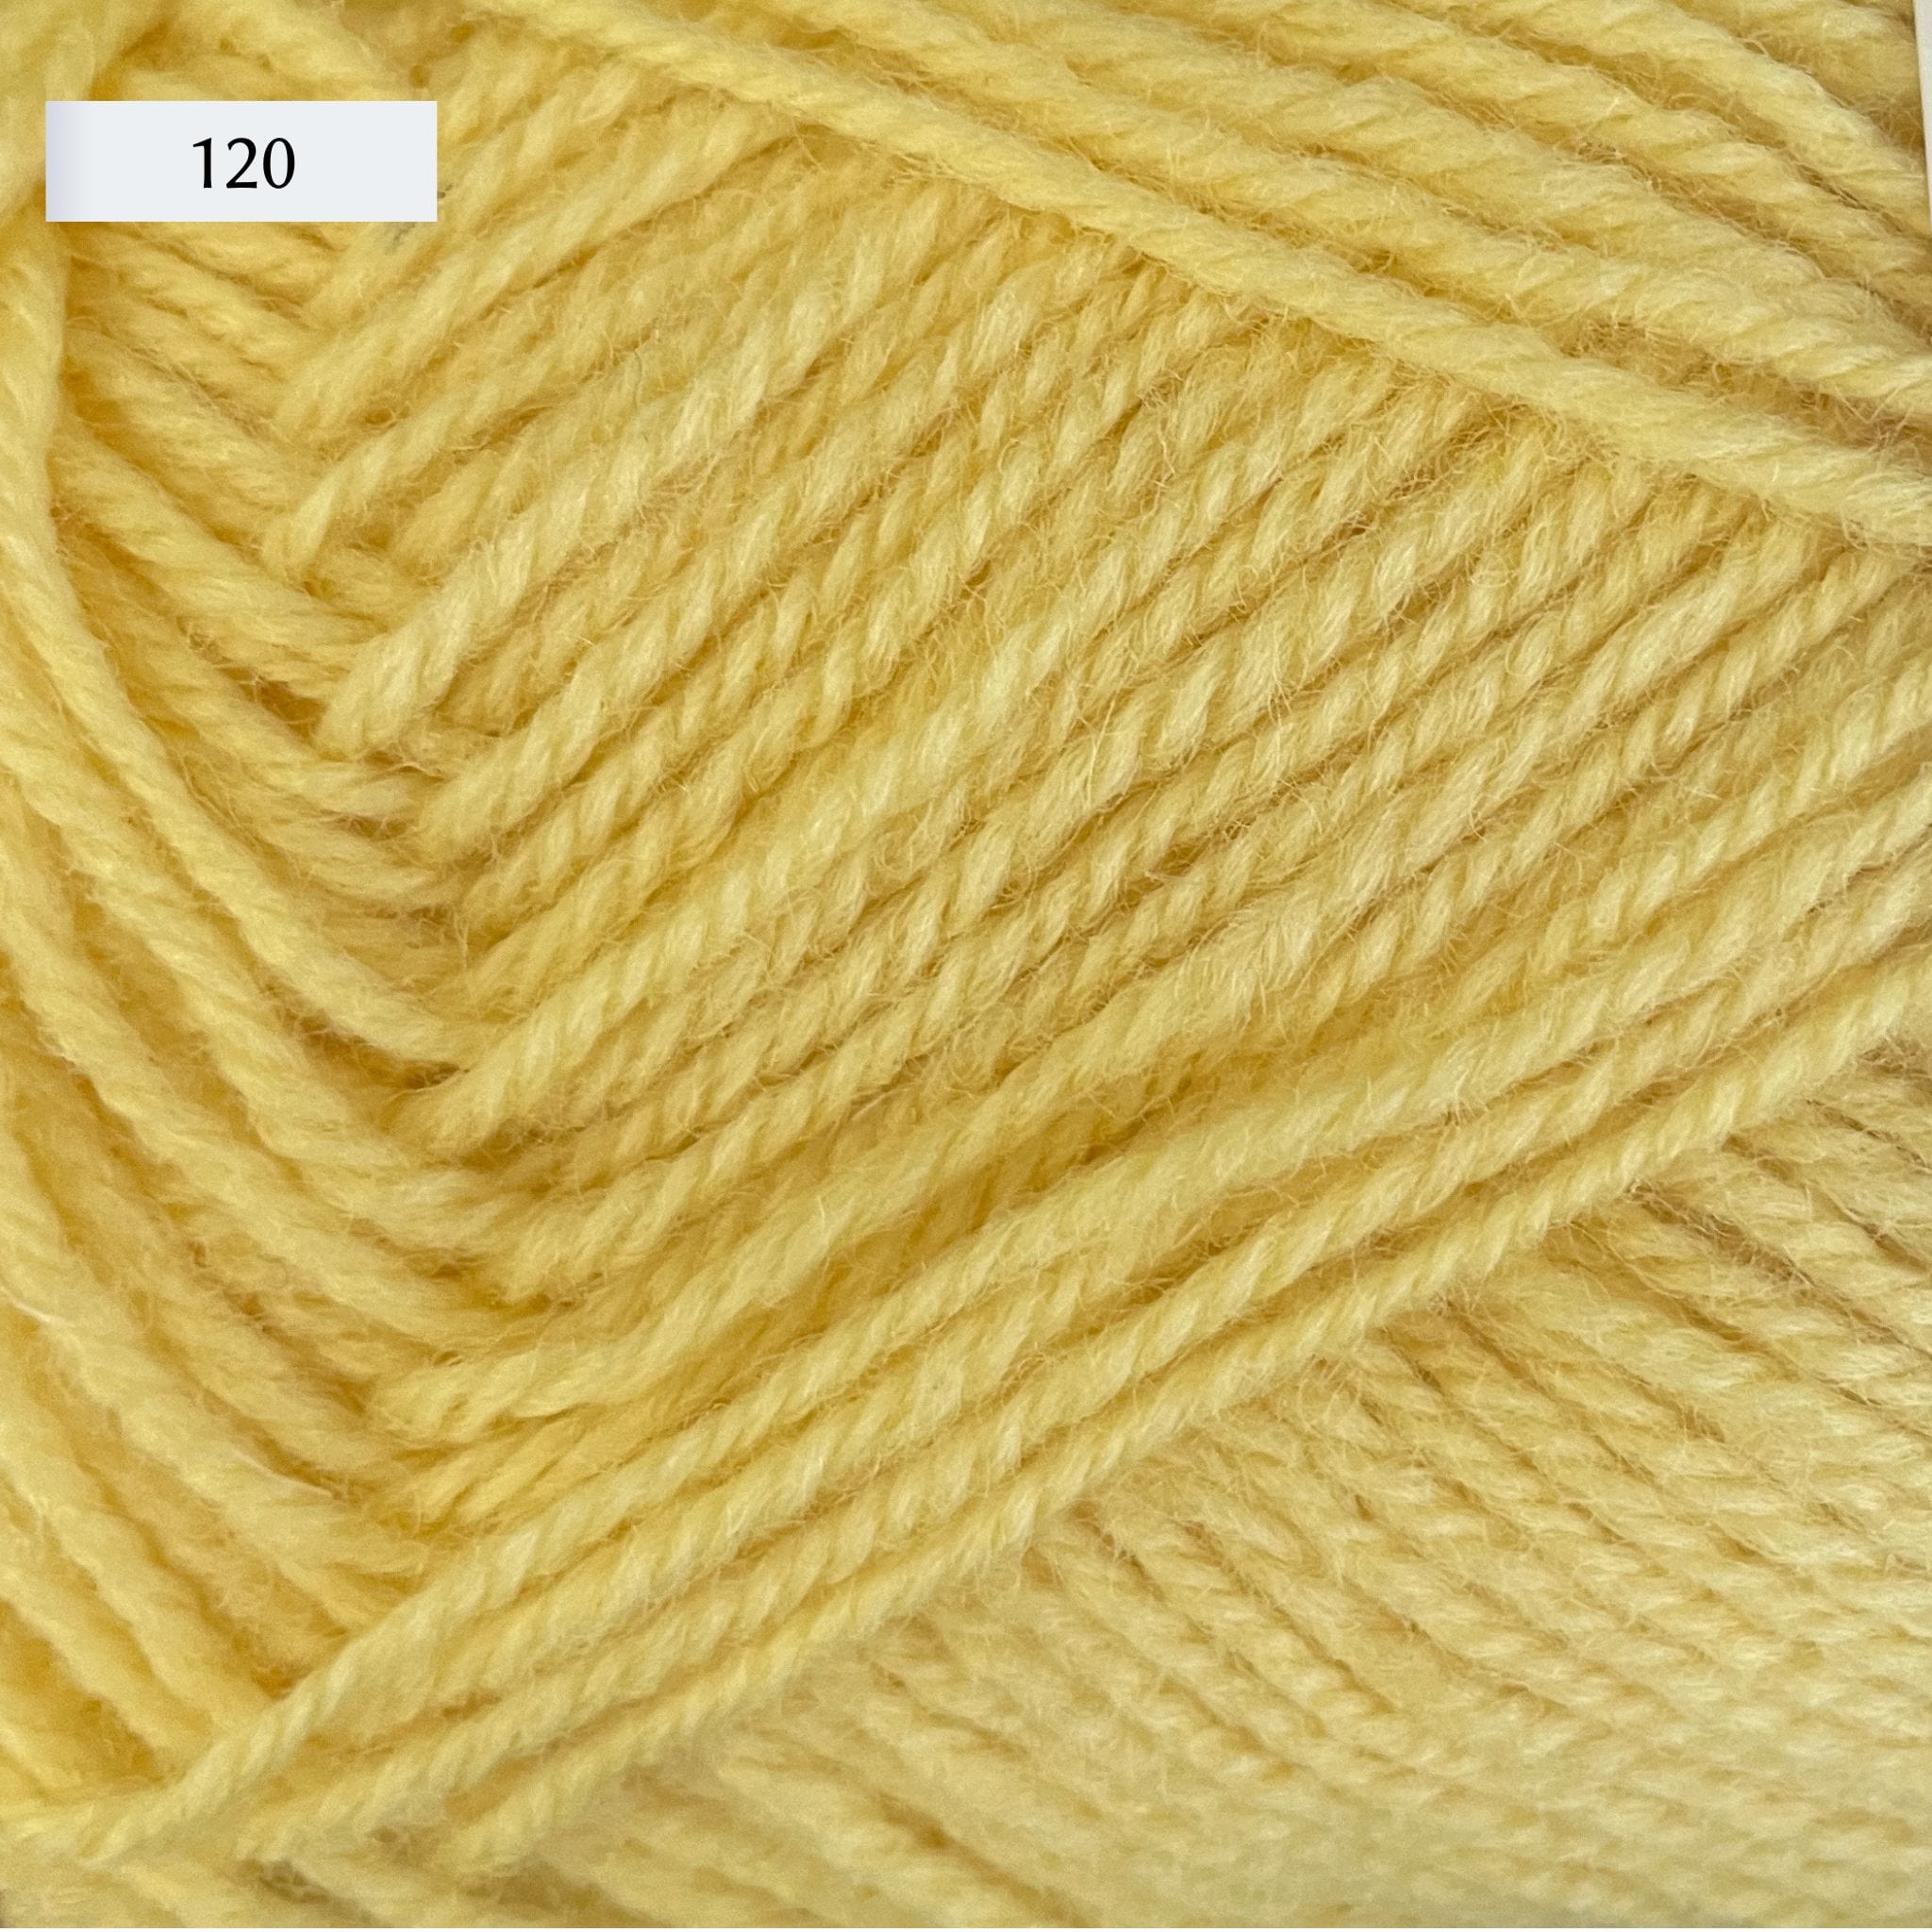 Rauma Strikkegarn, DK weight yarn, in color 120, light lemon yellow